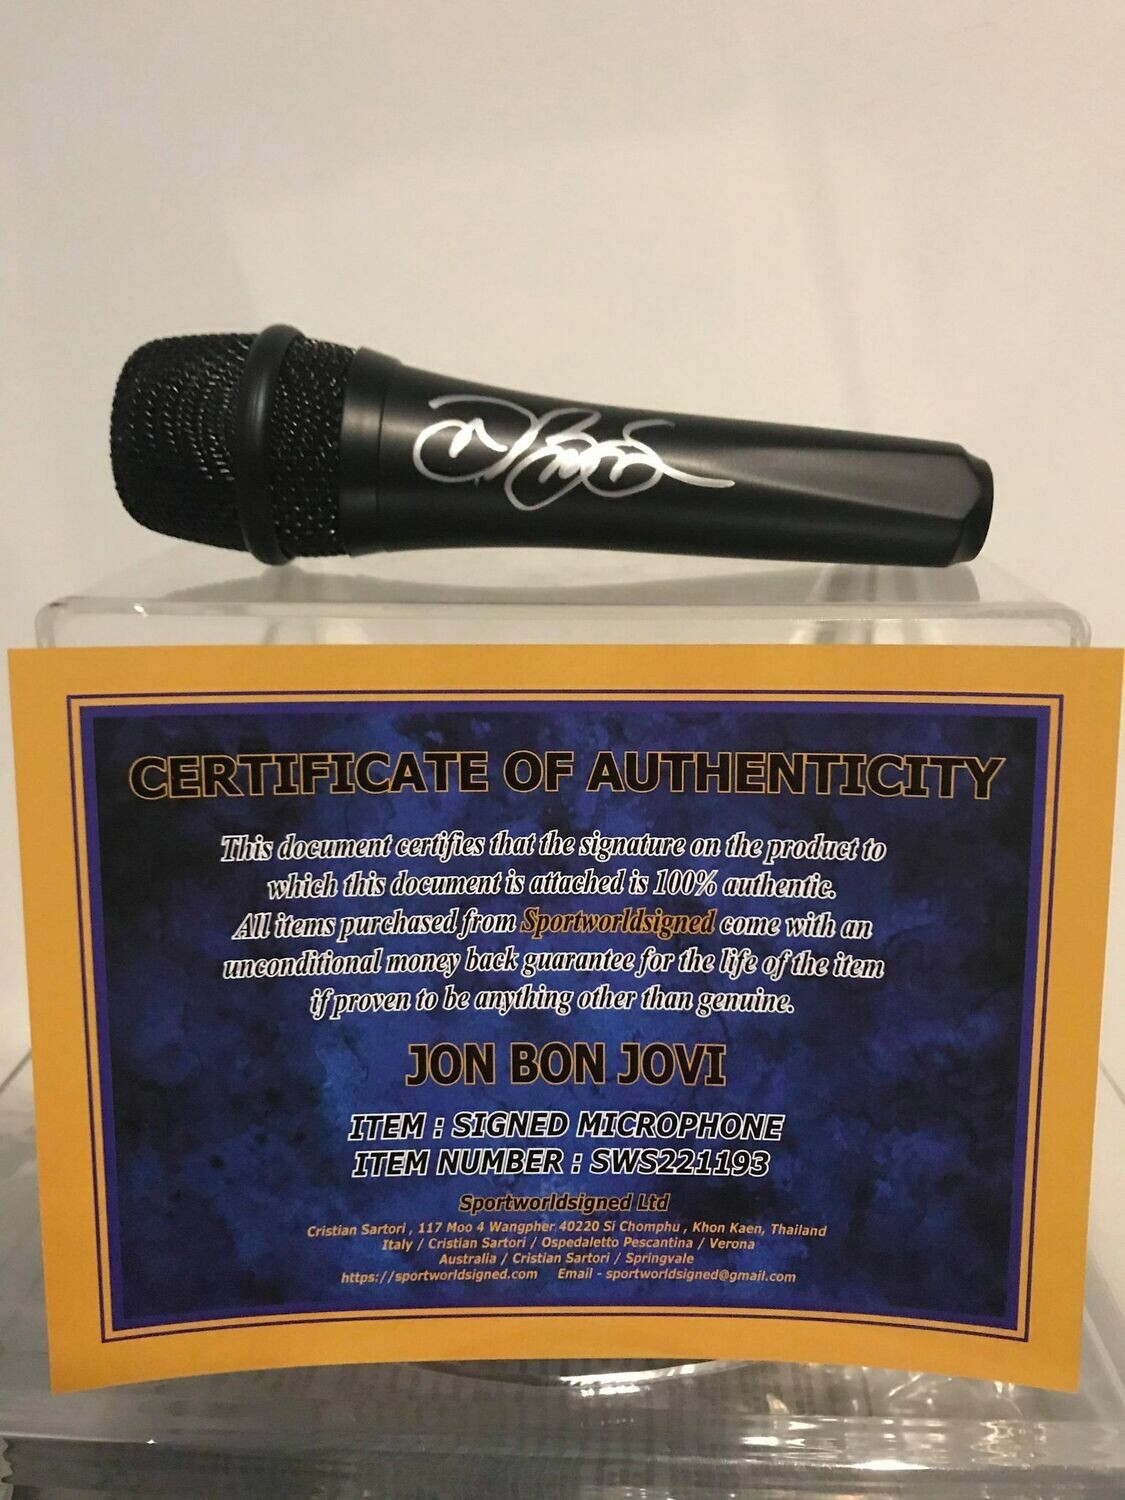 Microfono Autografato Signed JON BON JOVI   Autografato Signed Microphone  COA certificate Signed Microphone Signed JON BON JOVI Cantanti Singer Star